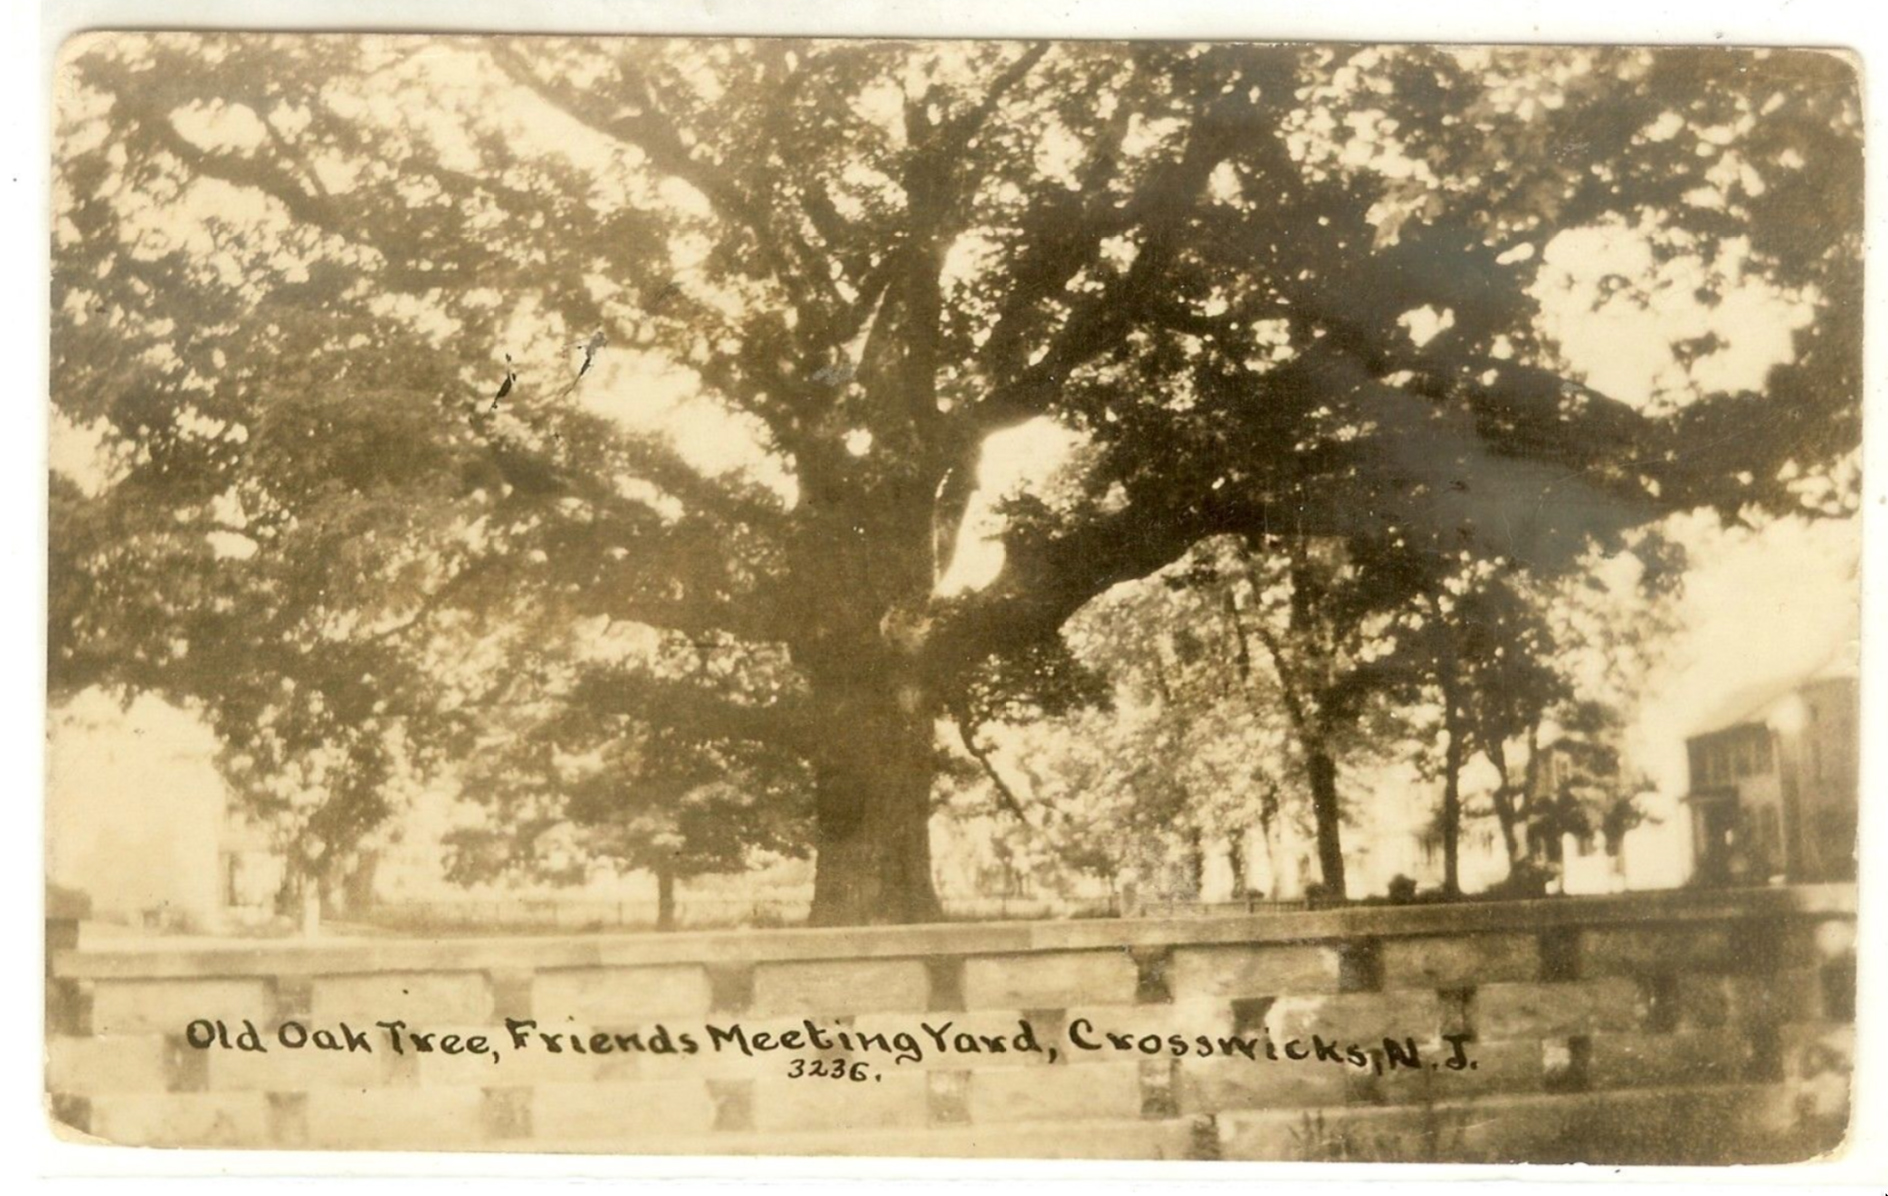 Crosswicks - The old oak tree in the Meeting House Yard - c 1910